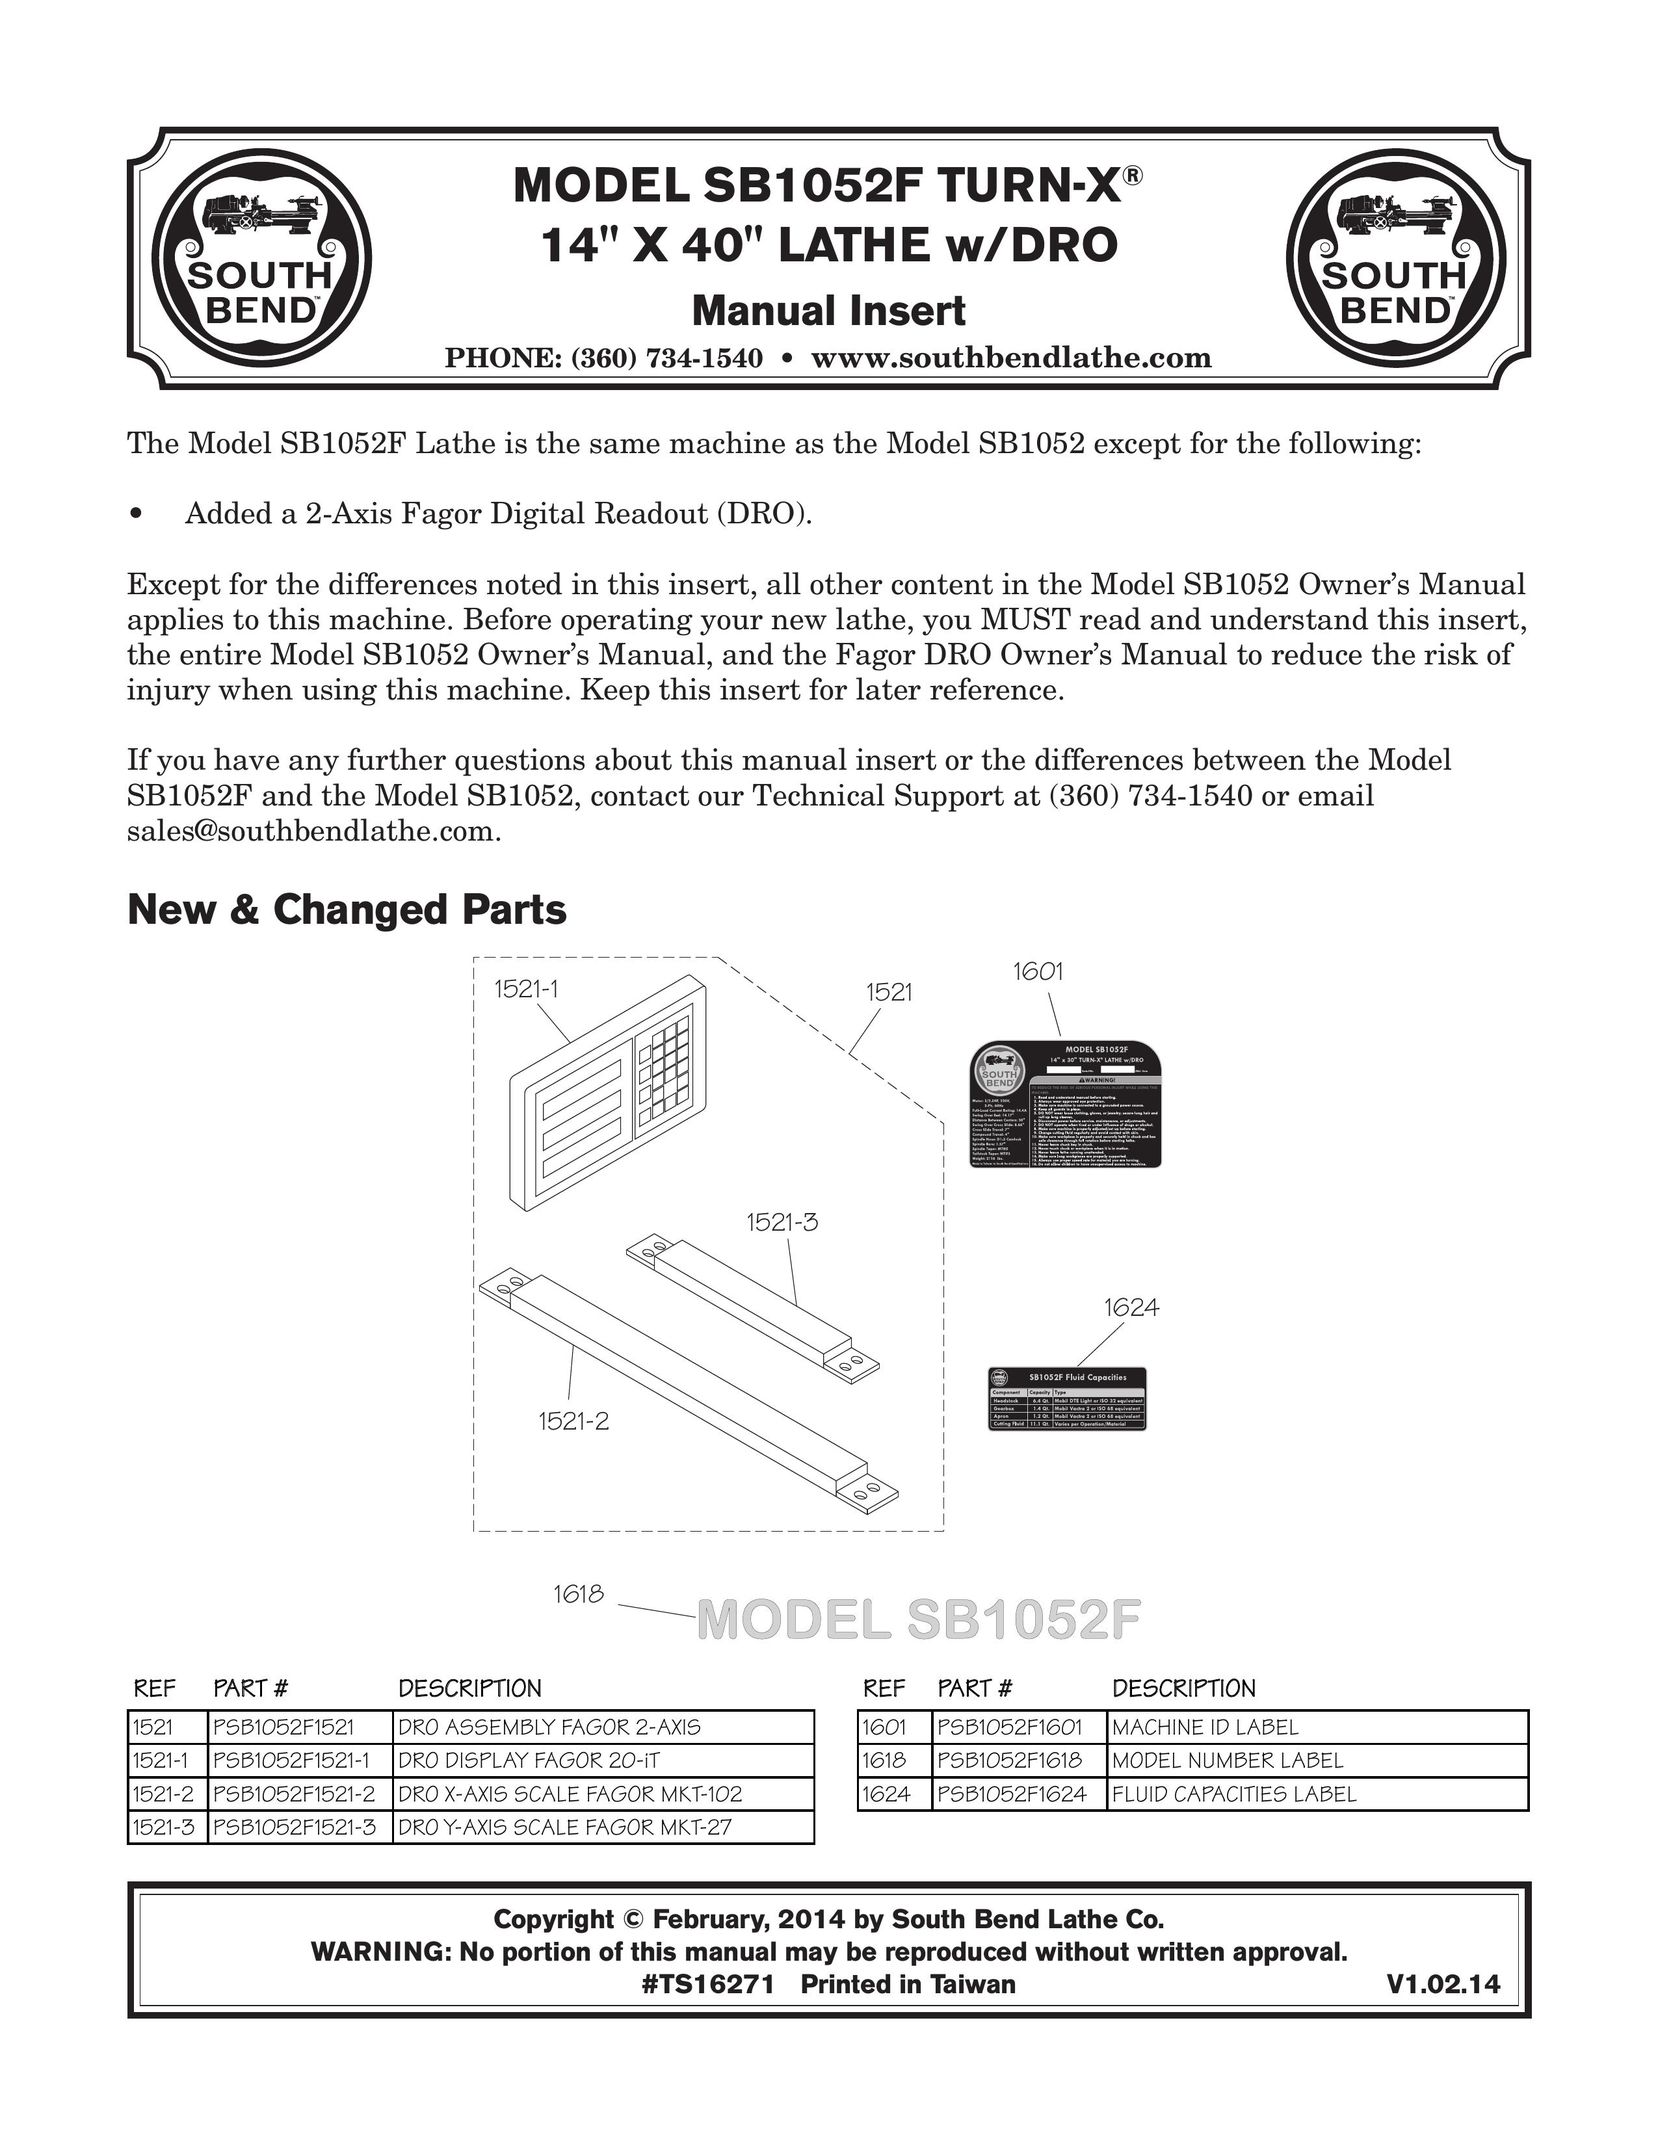 Southbend SB1052F TURN-X Lathe User Manual